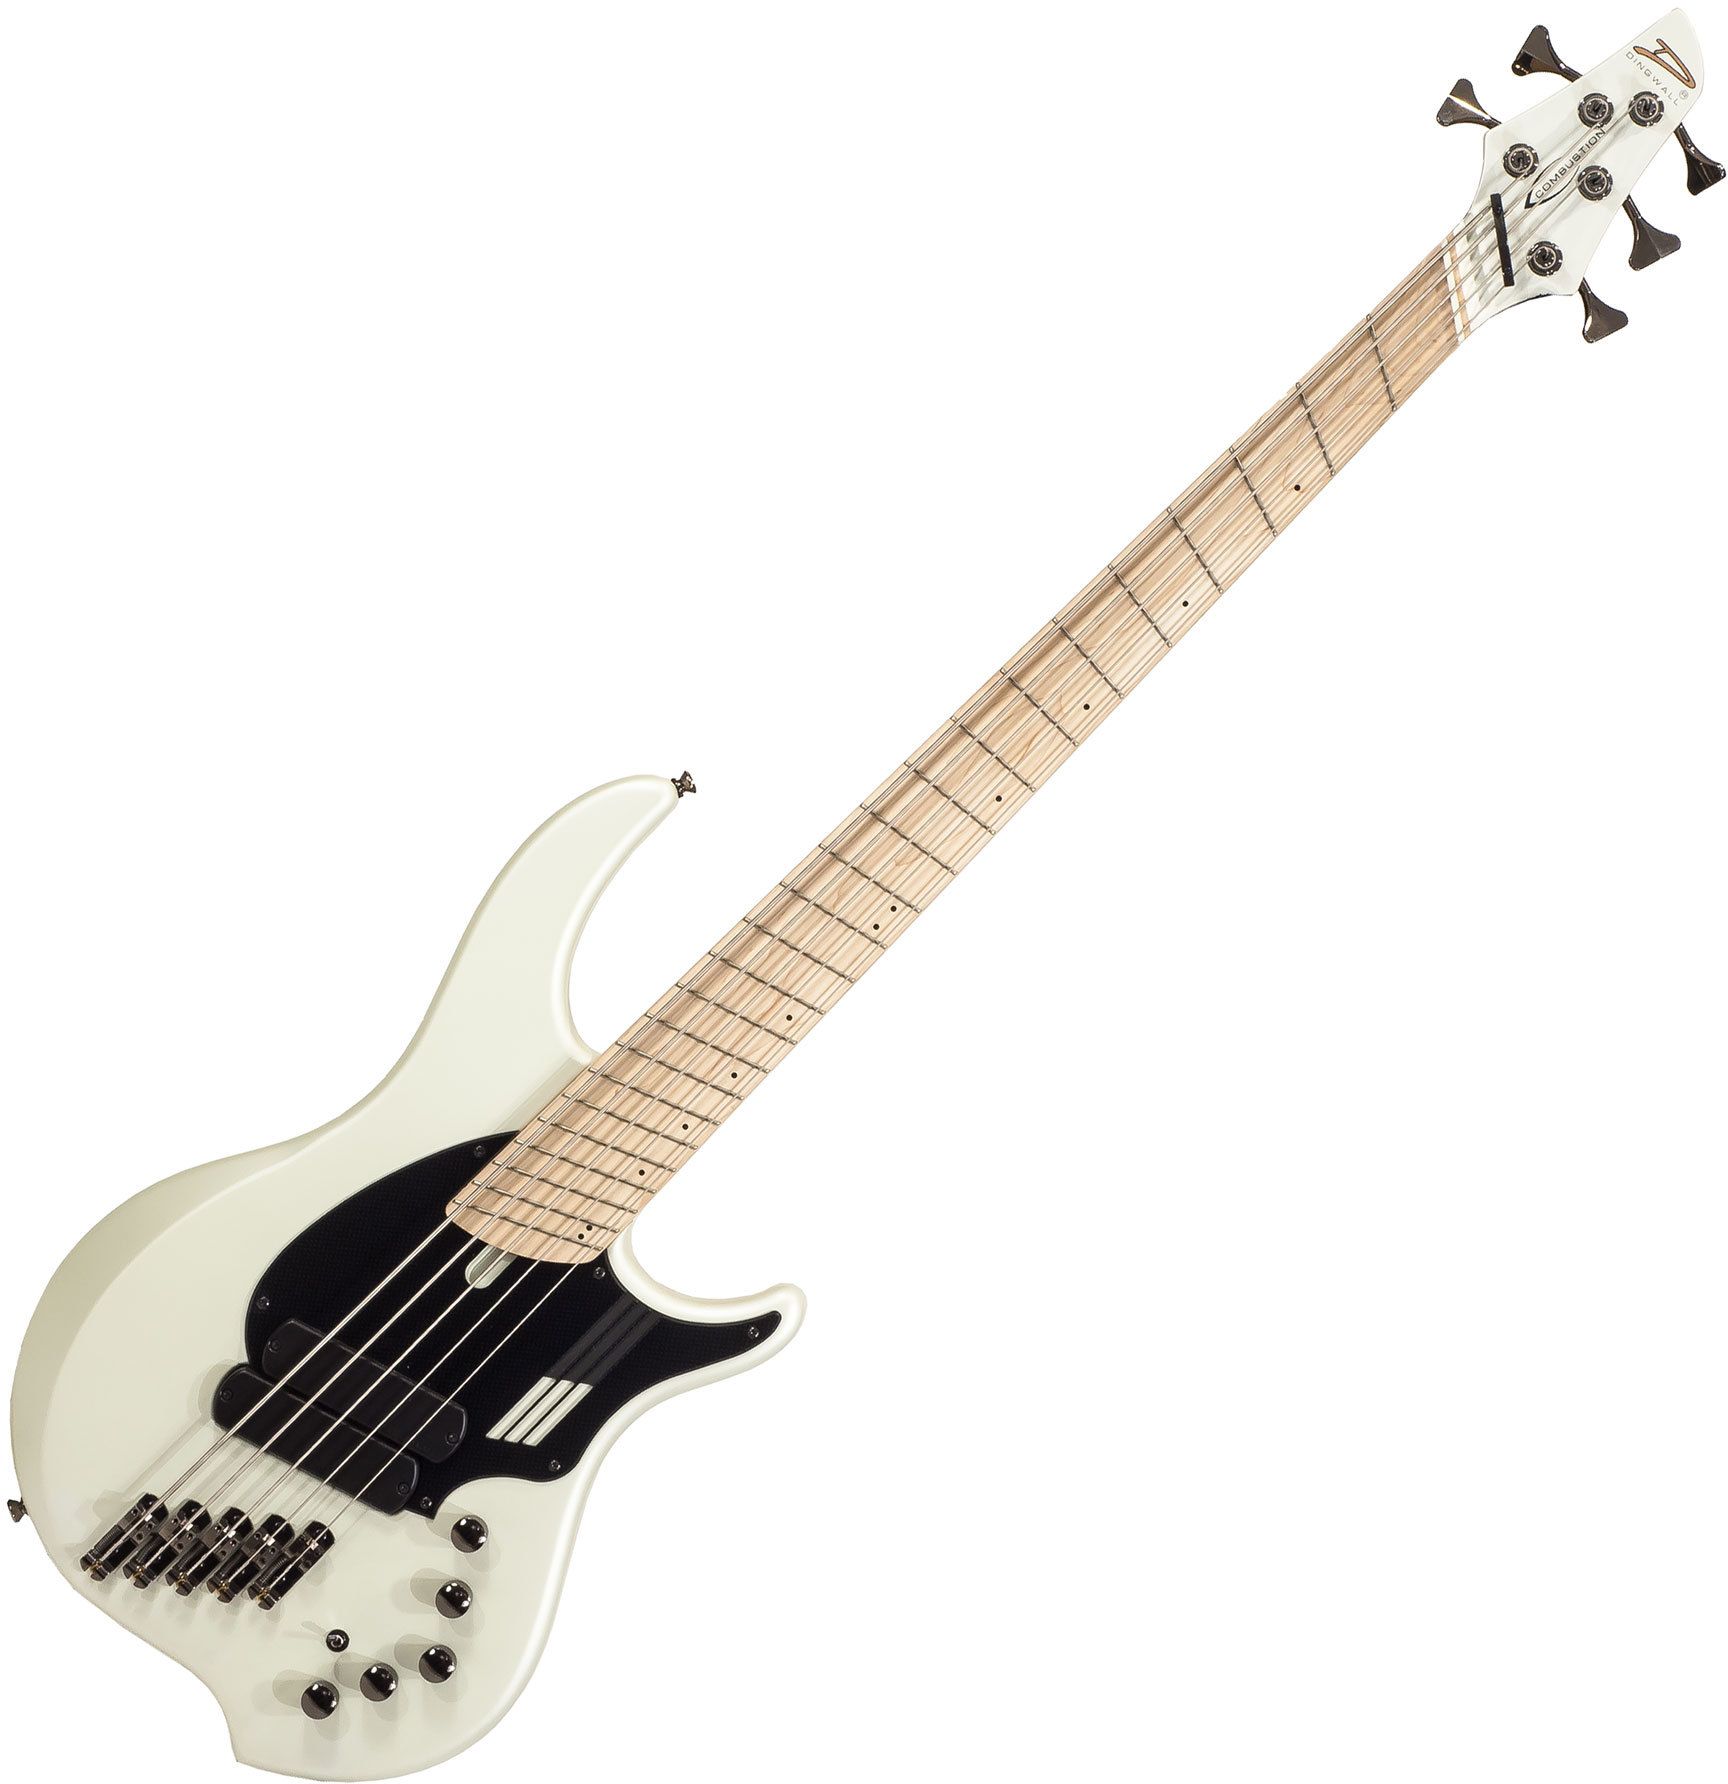 Dingwall NG2 - 5 String - Pearl White Bass Guitar | Musique Dépôt